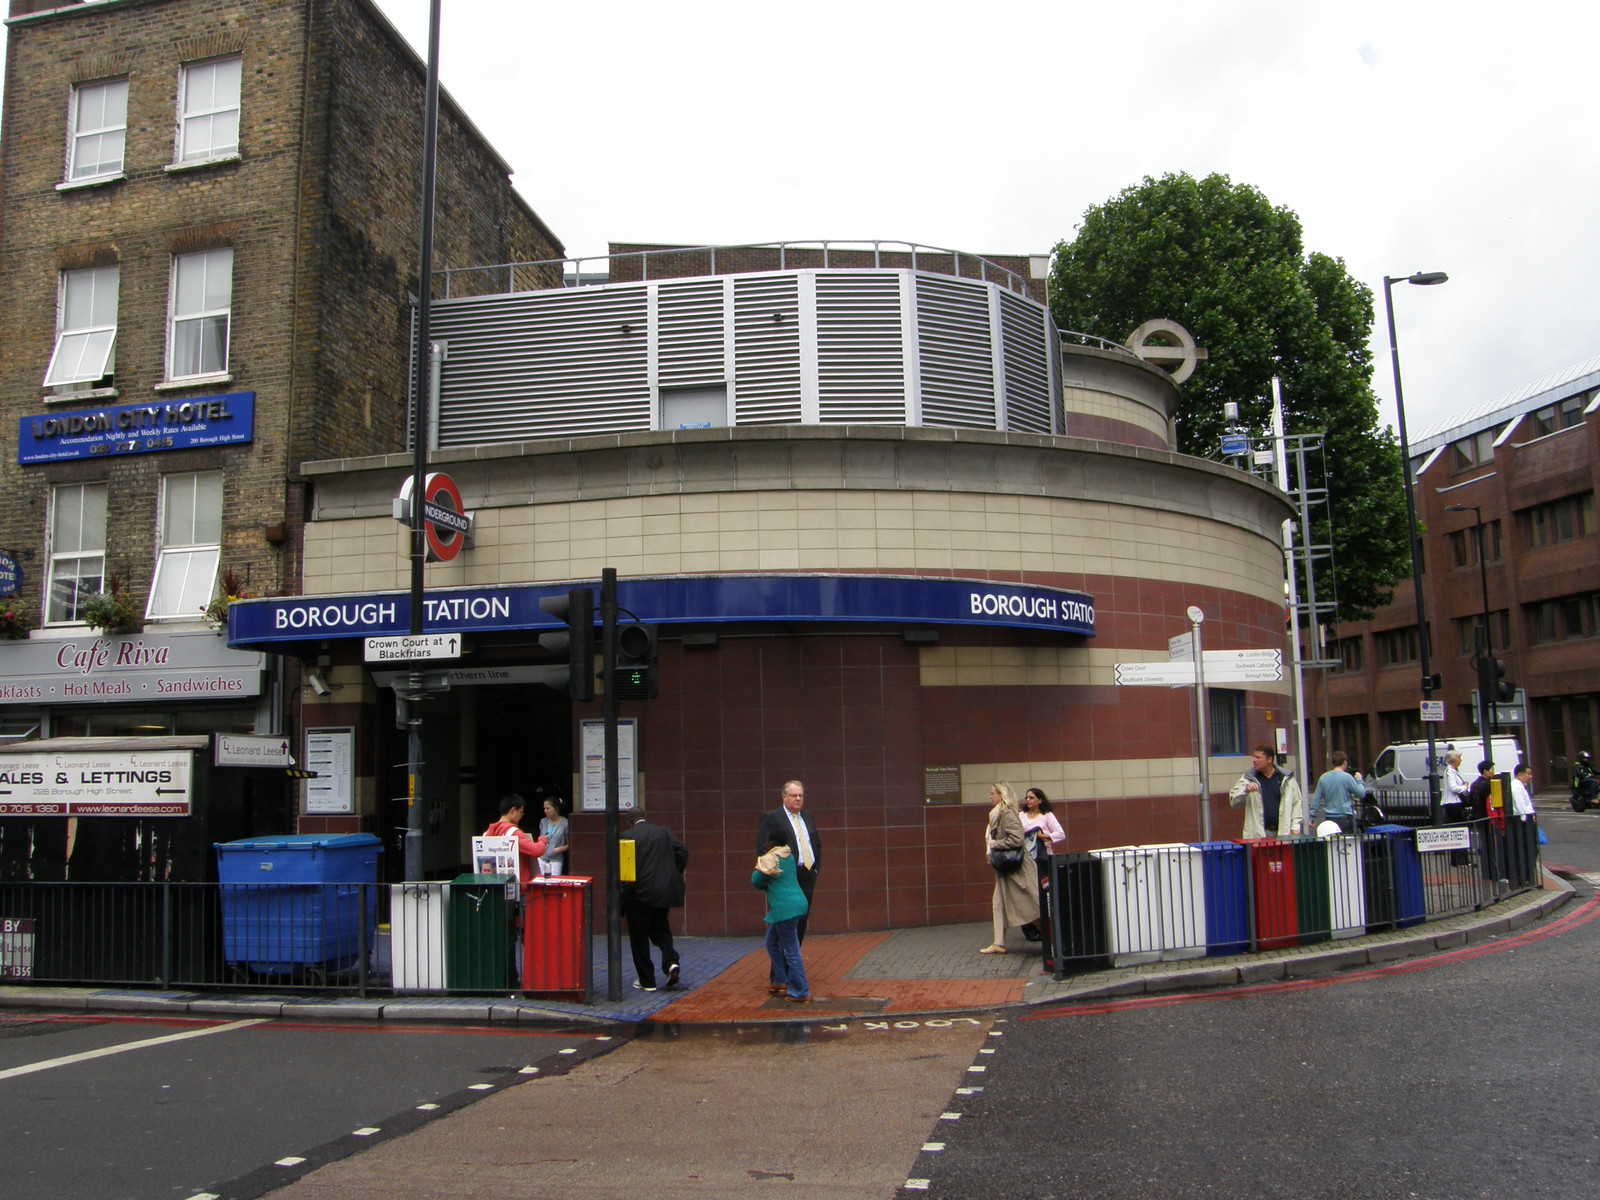 Borough station